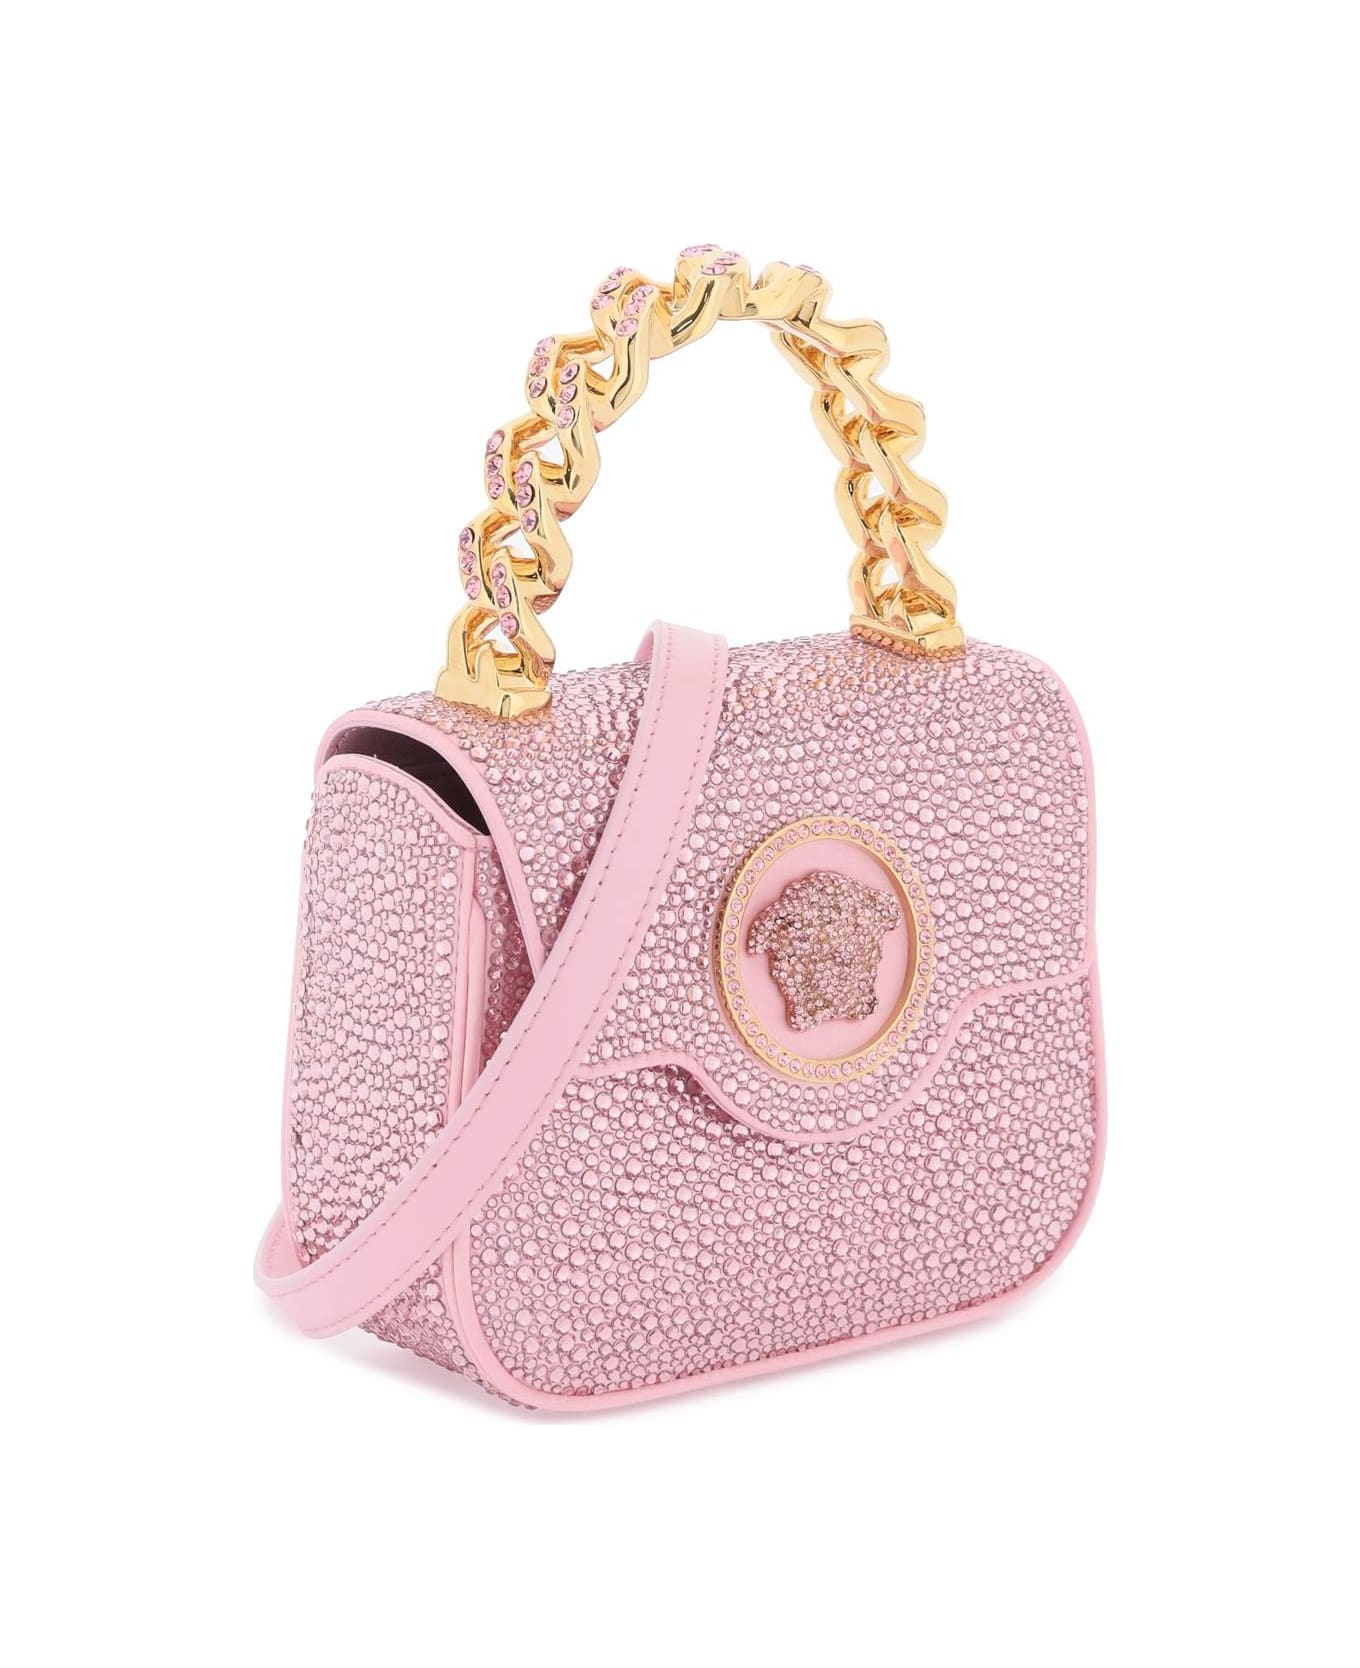 Versace La Medusa Handbag With Crystals - PALE PINK VERSACE GOLD (Pink)